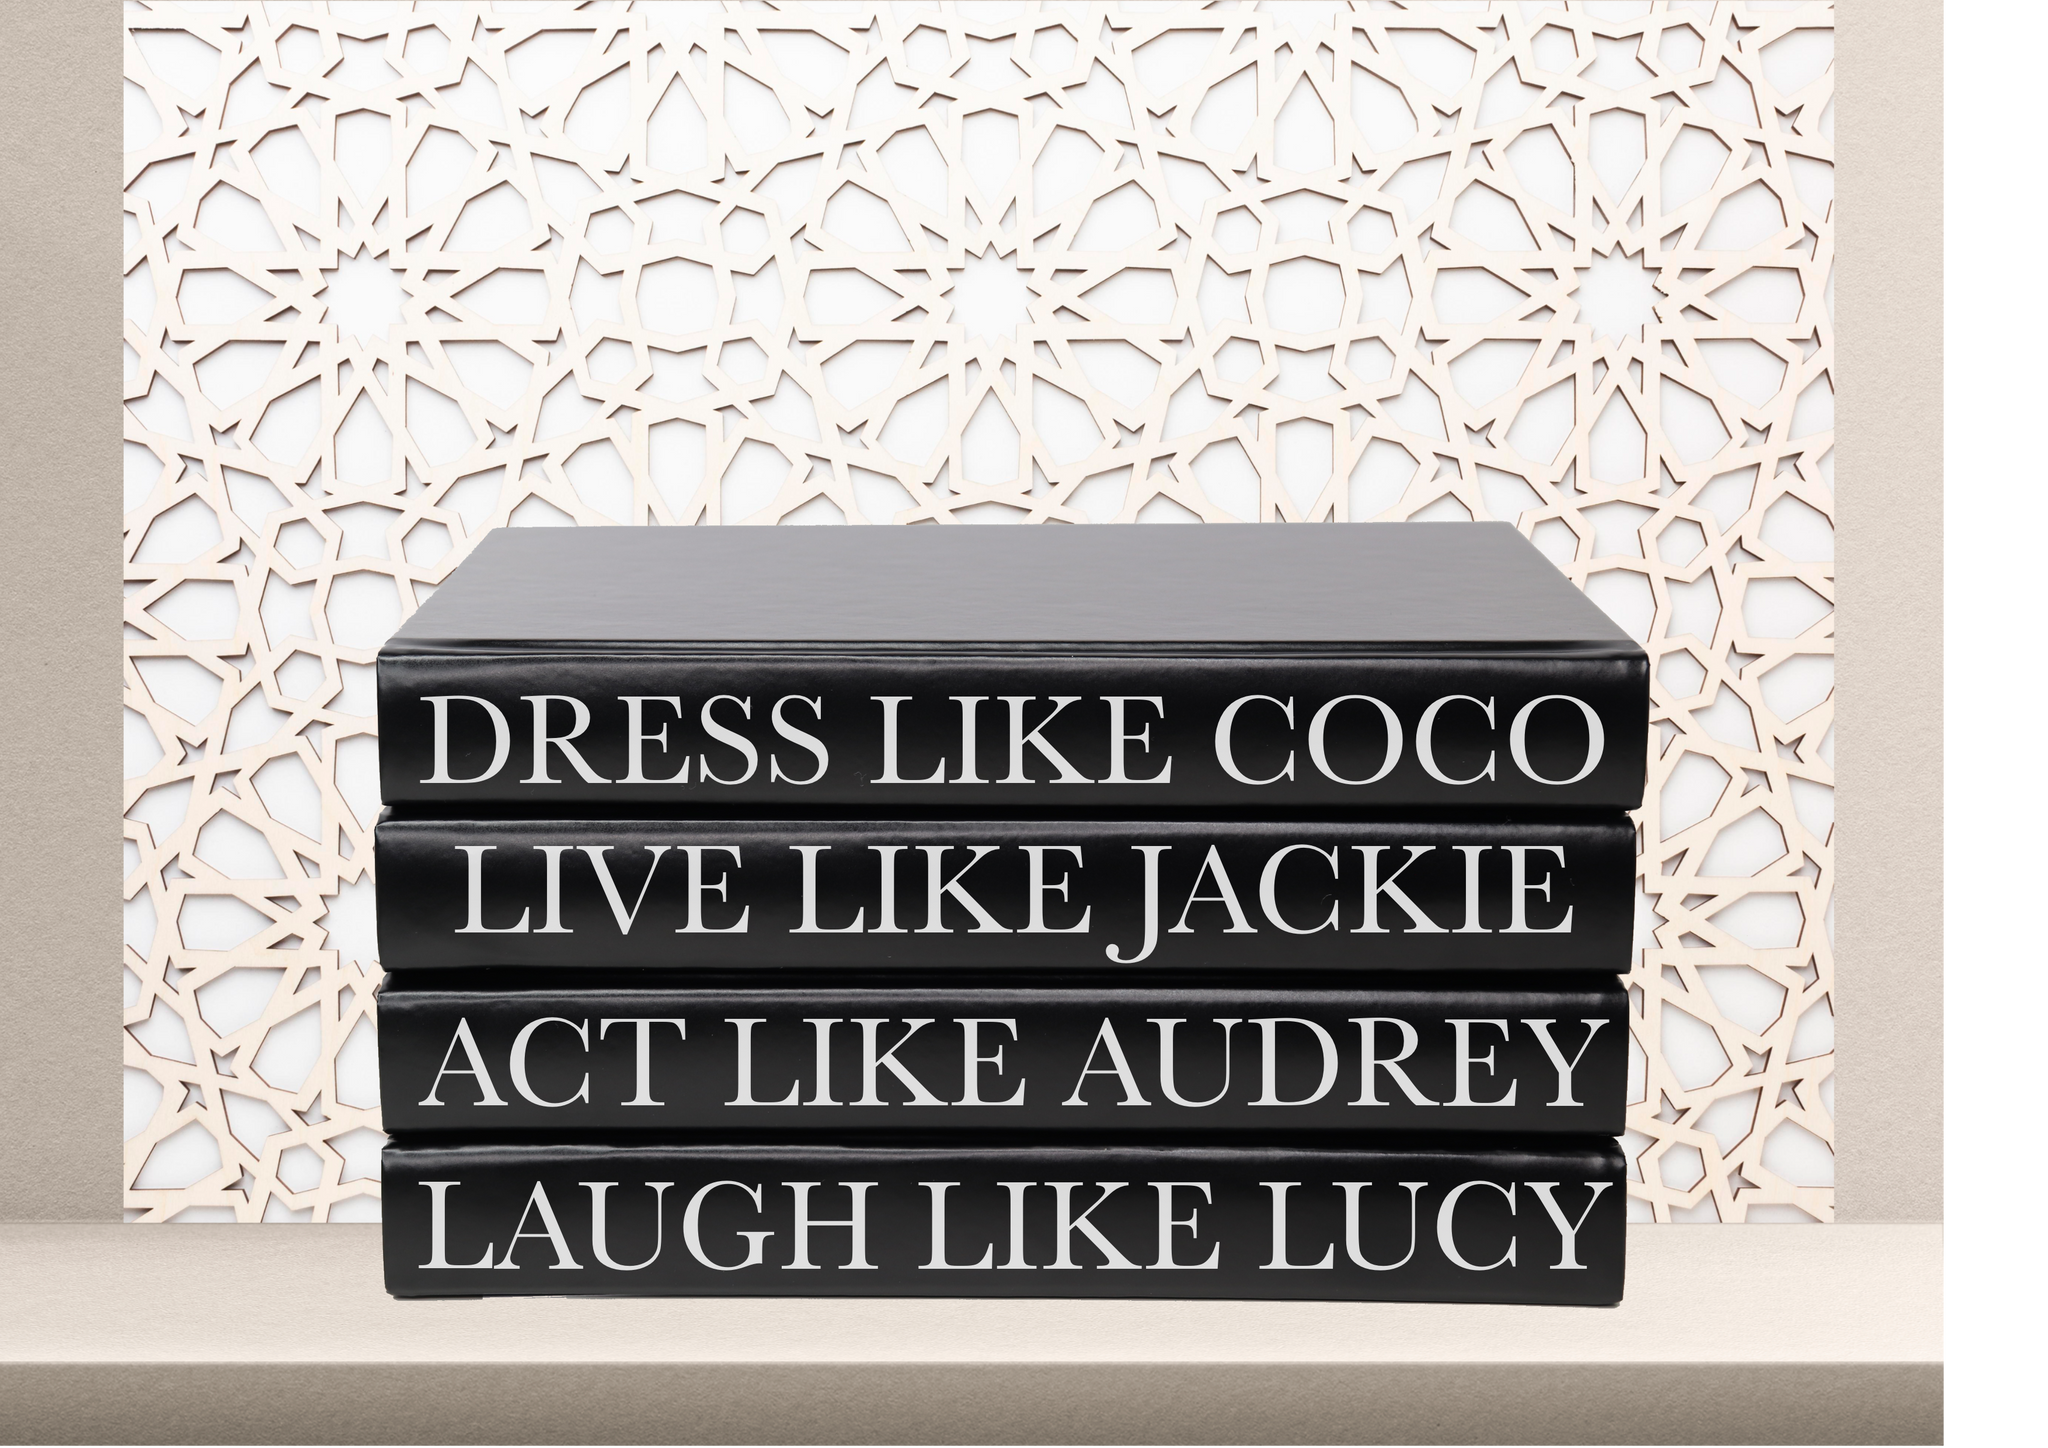 Decorative Designer 4 Book Stack laugh Like Lucy 